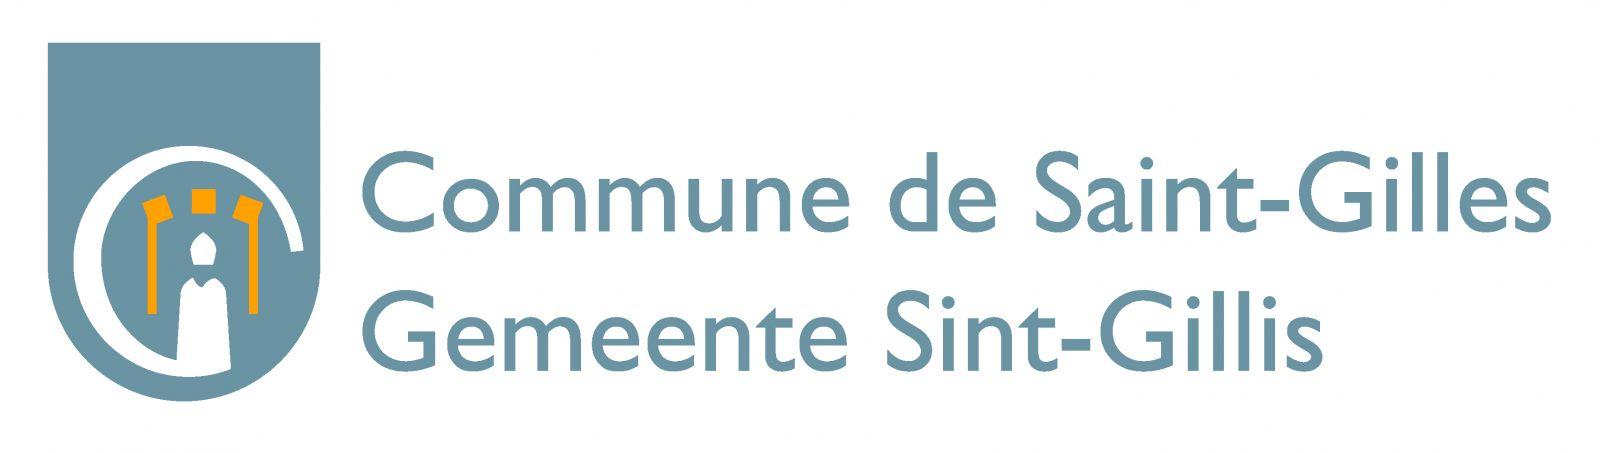 saint gilles logo